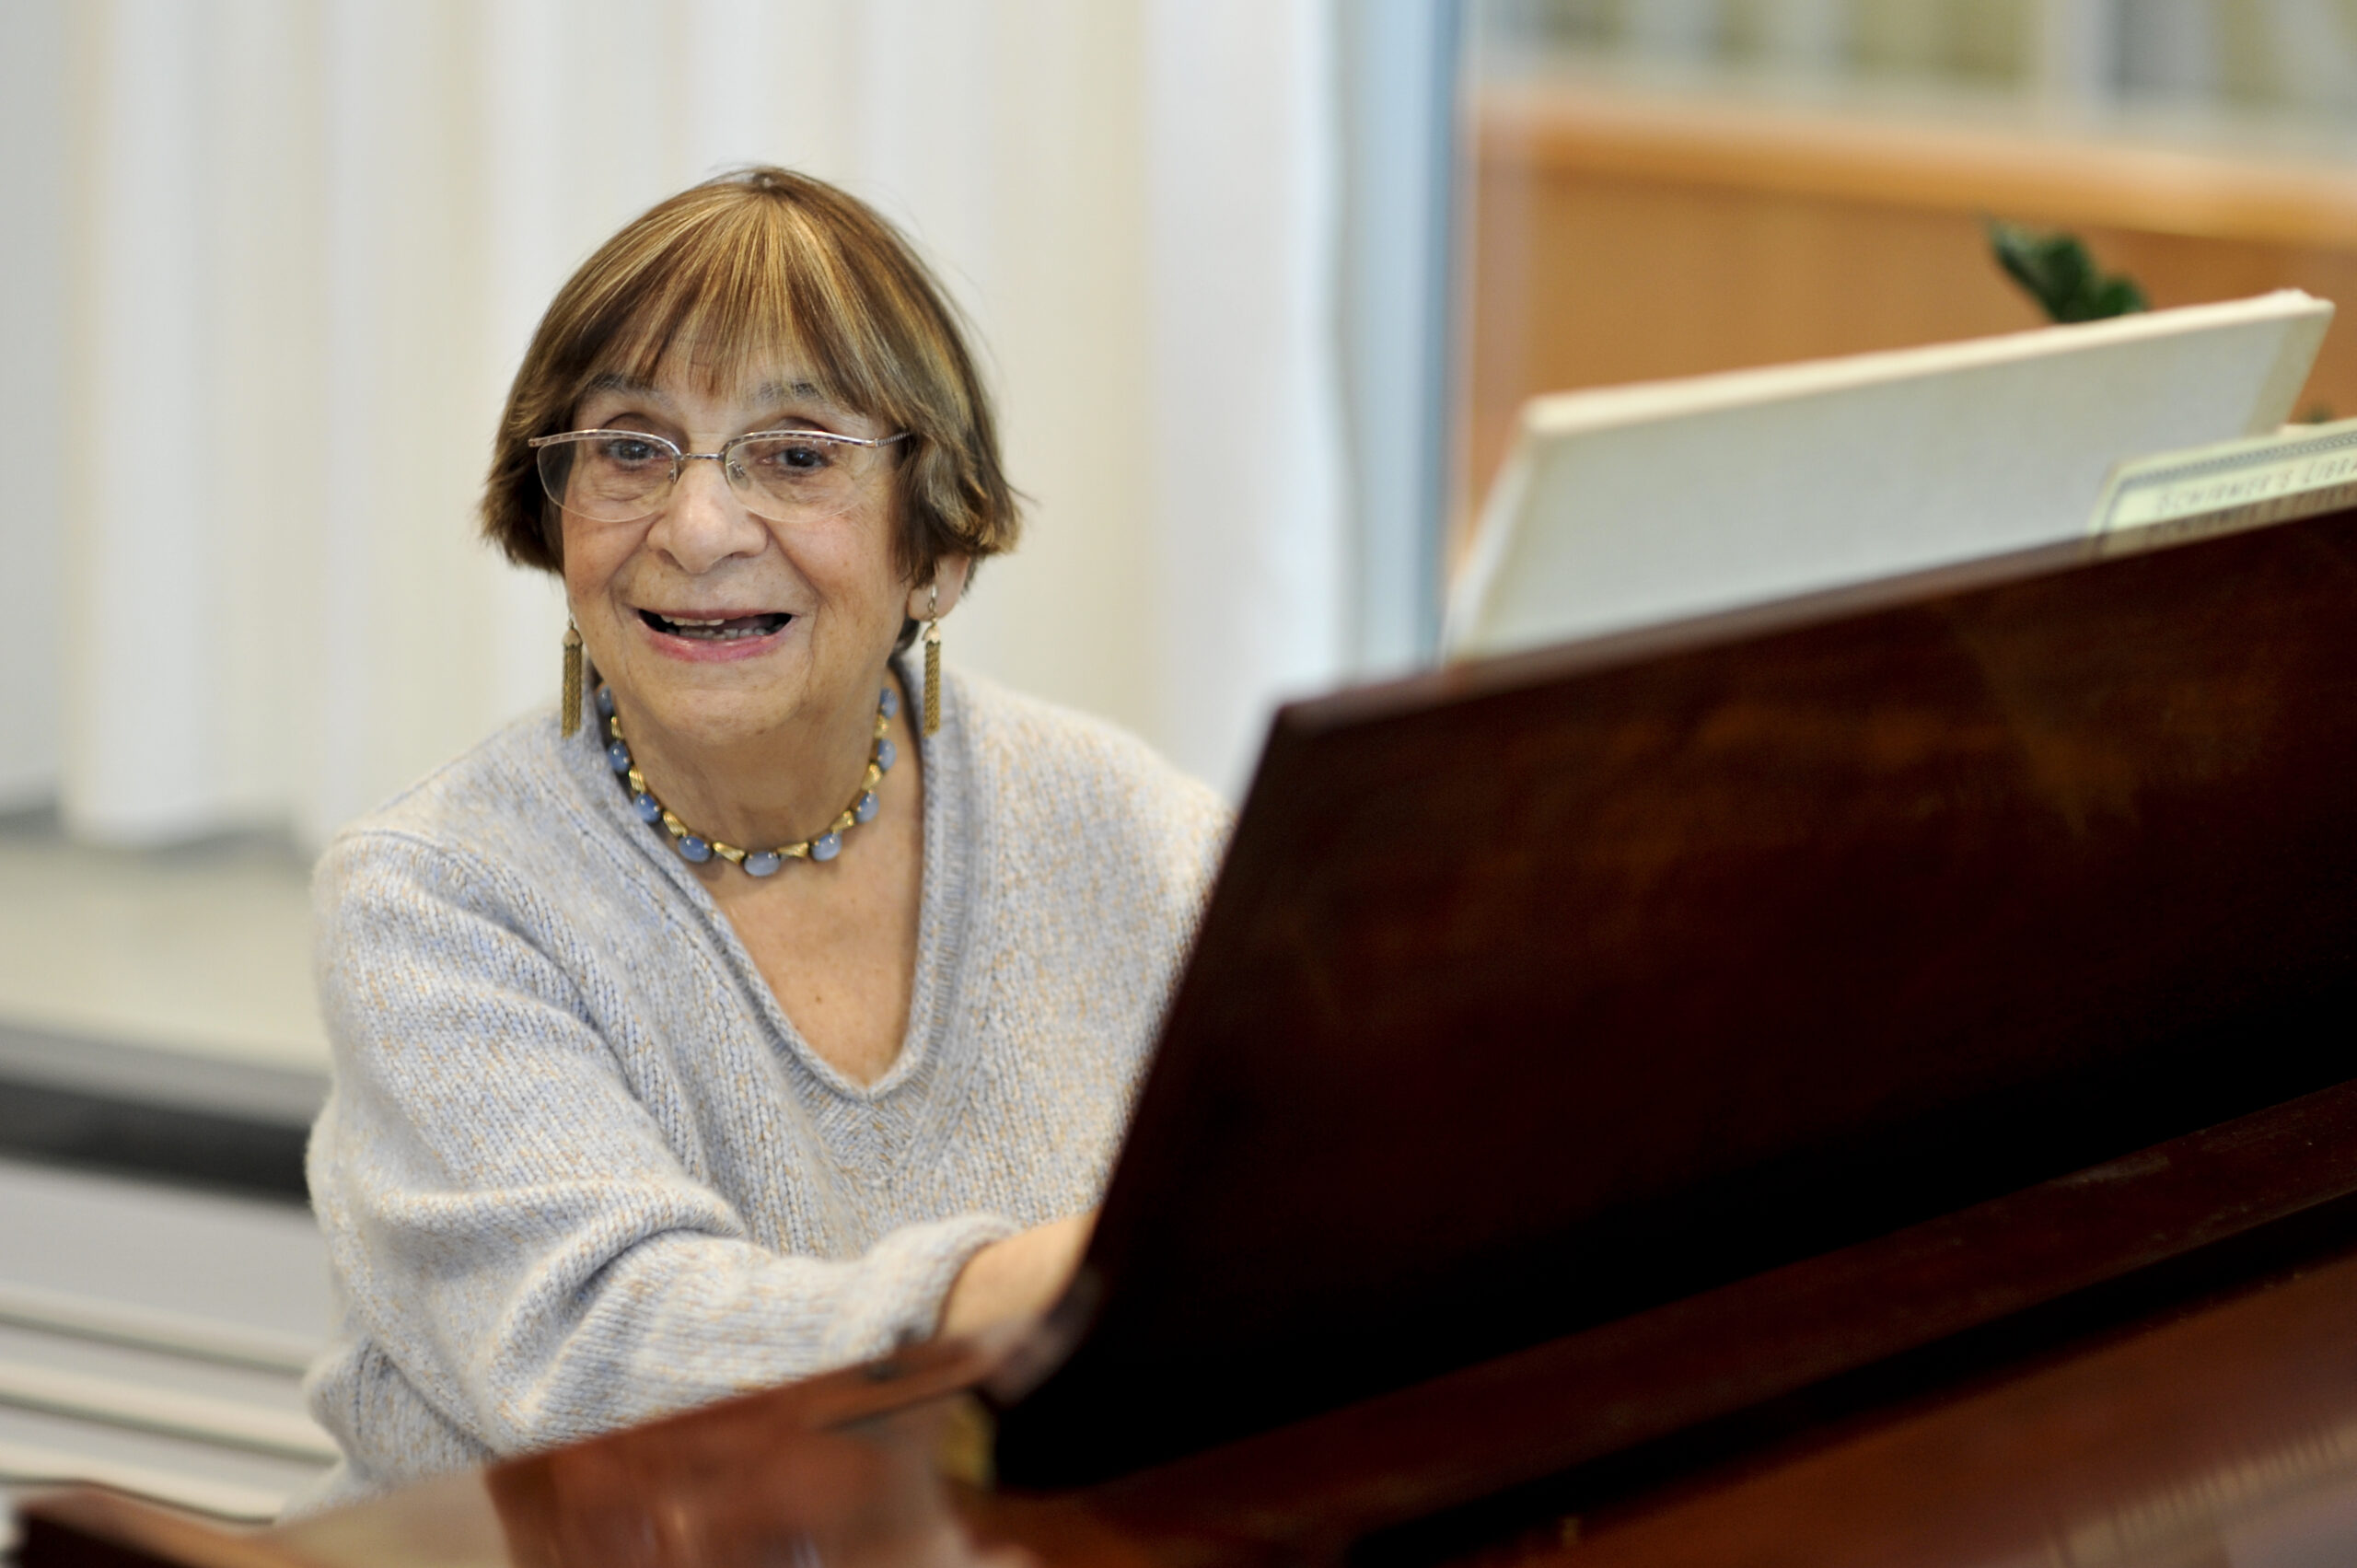 Ursula Mamlok at the piano (Photo by Simon Pauly)